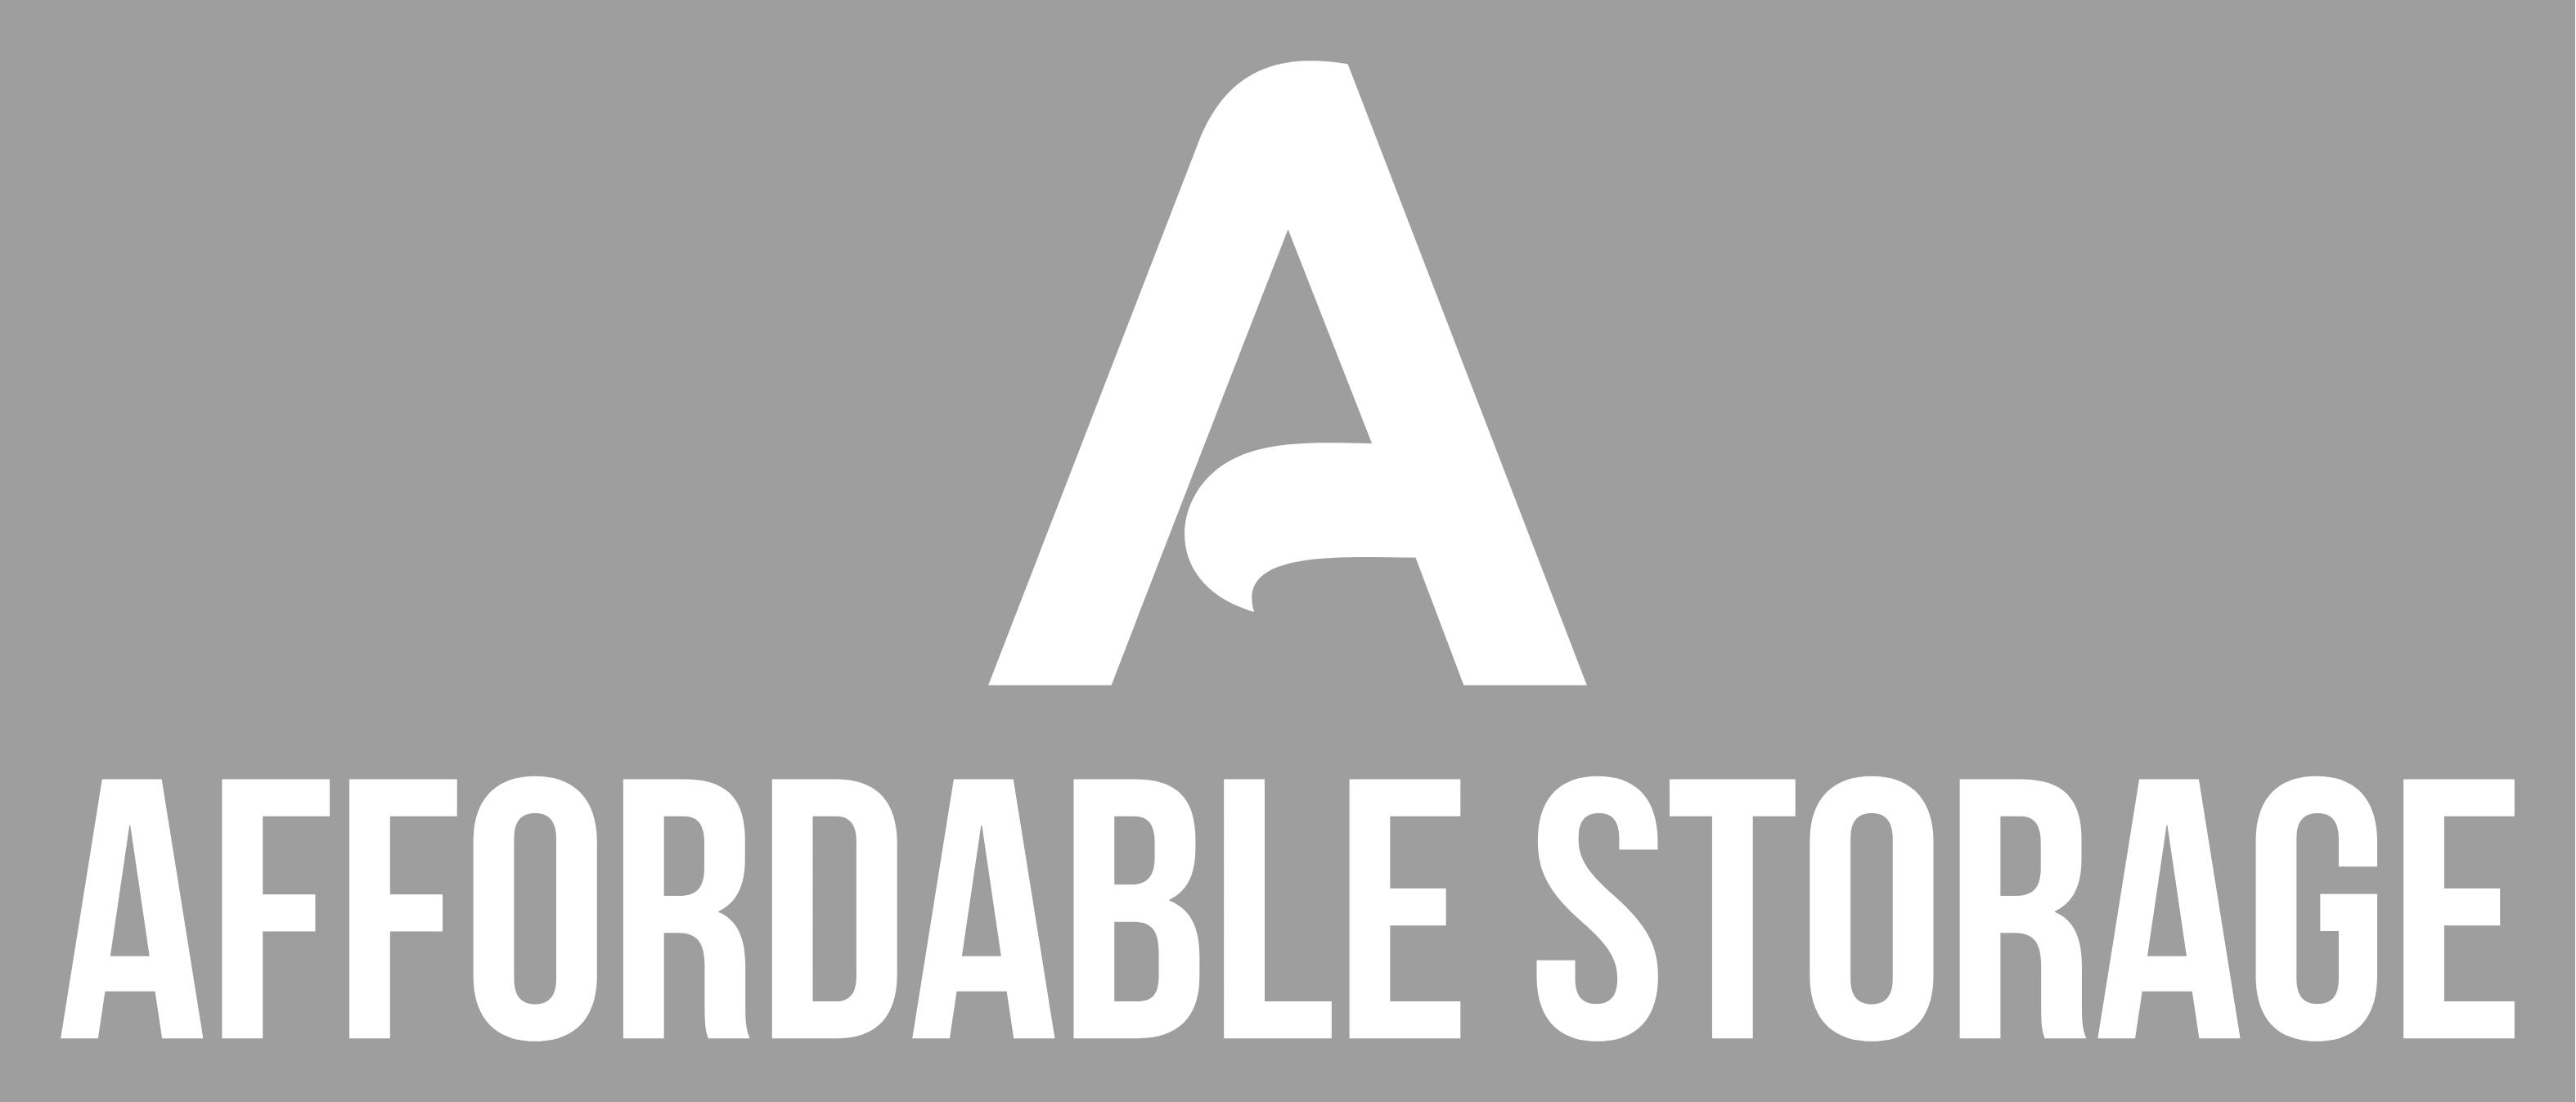 affordable storage logo